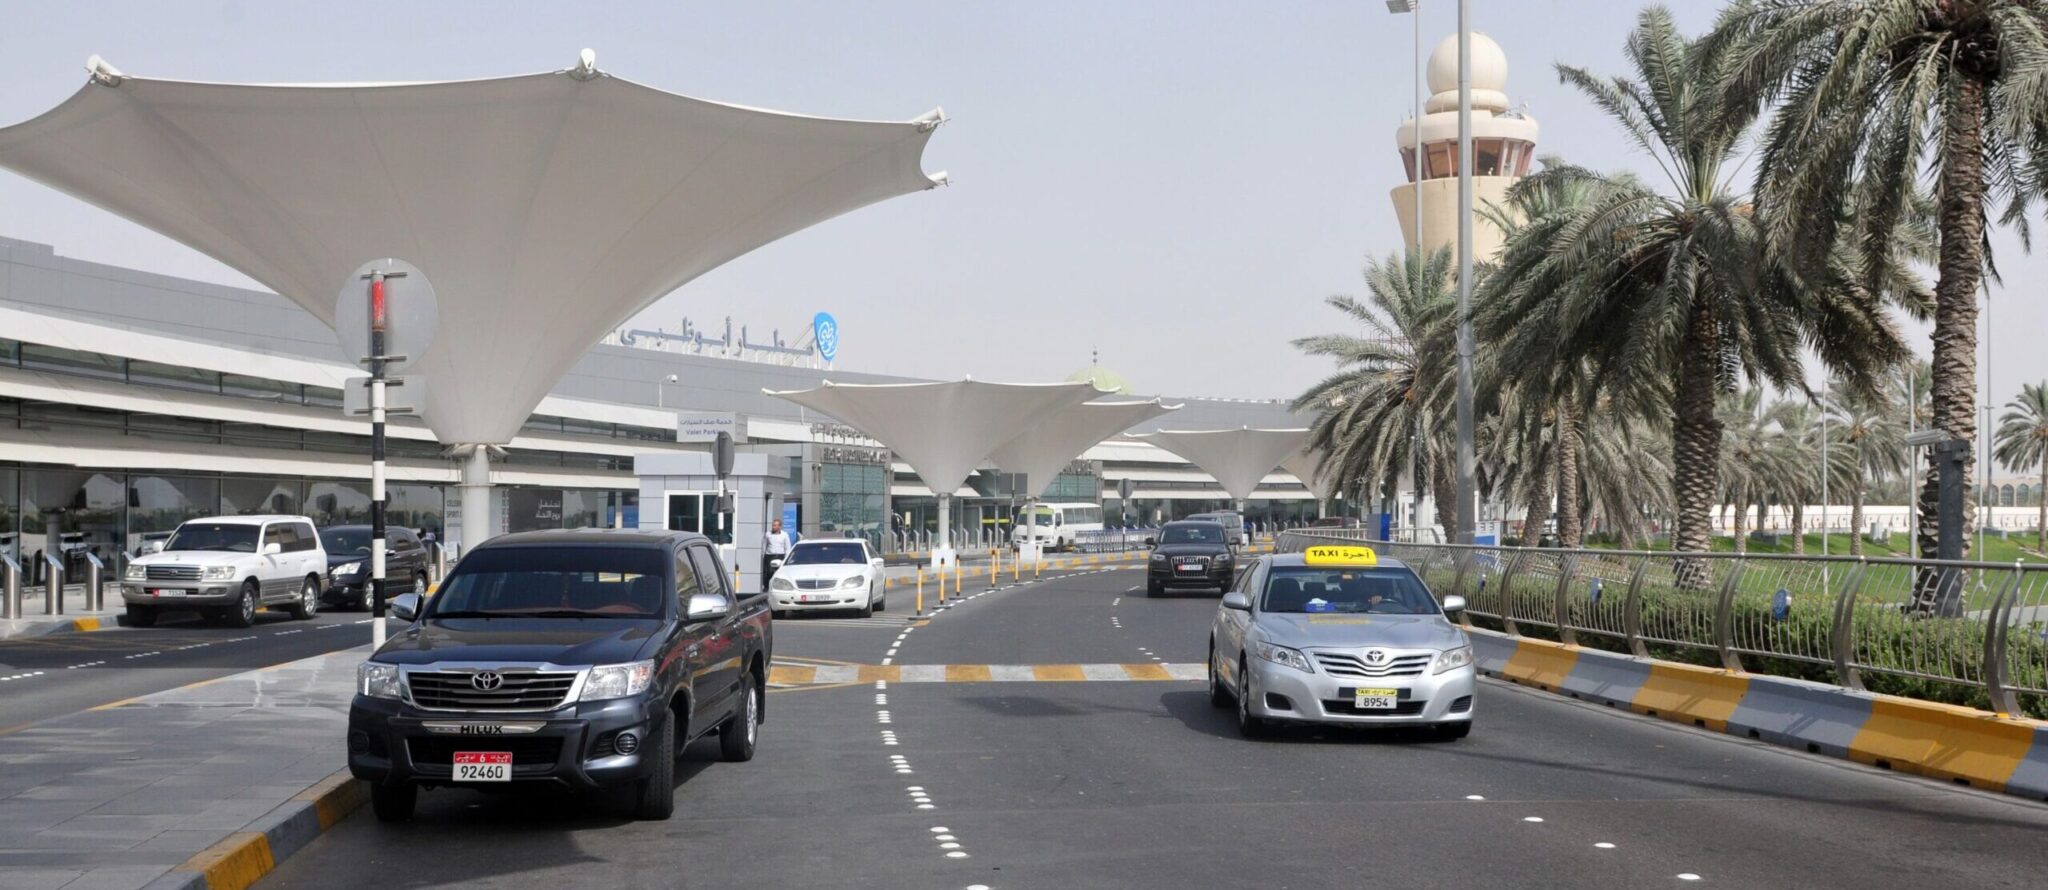 Abu Dhabi Airport Road Rent a car